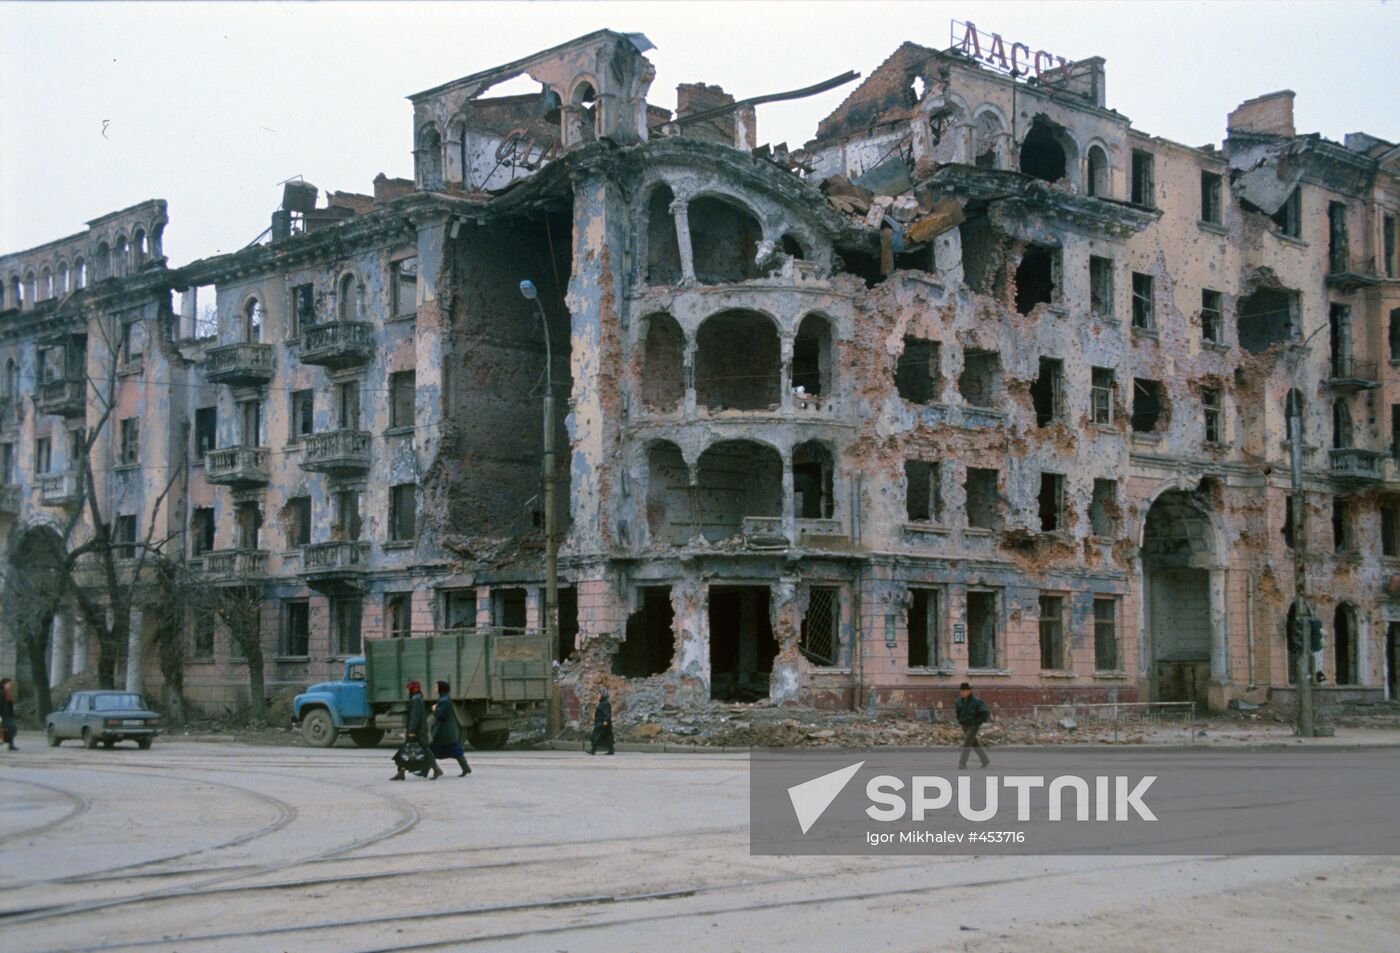 The city of Grozny